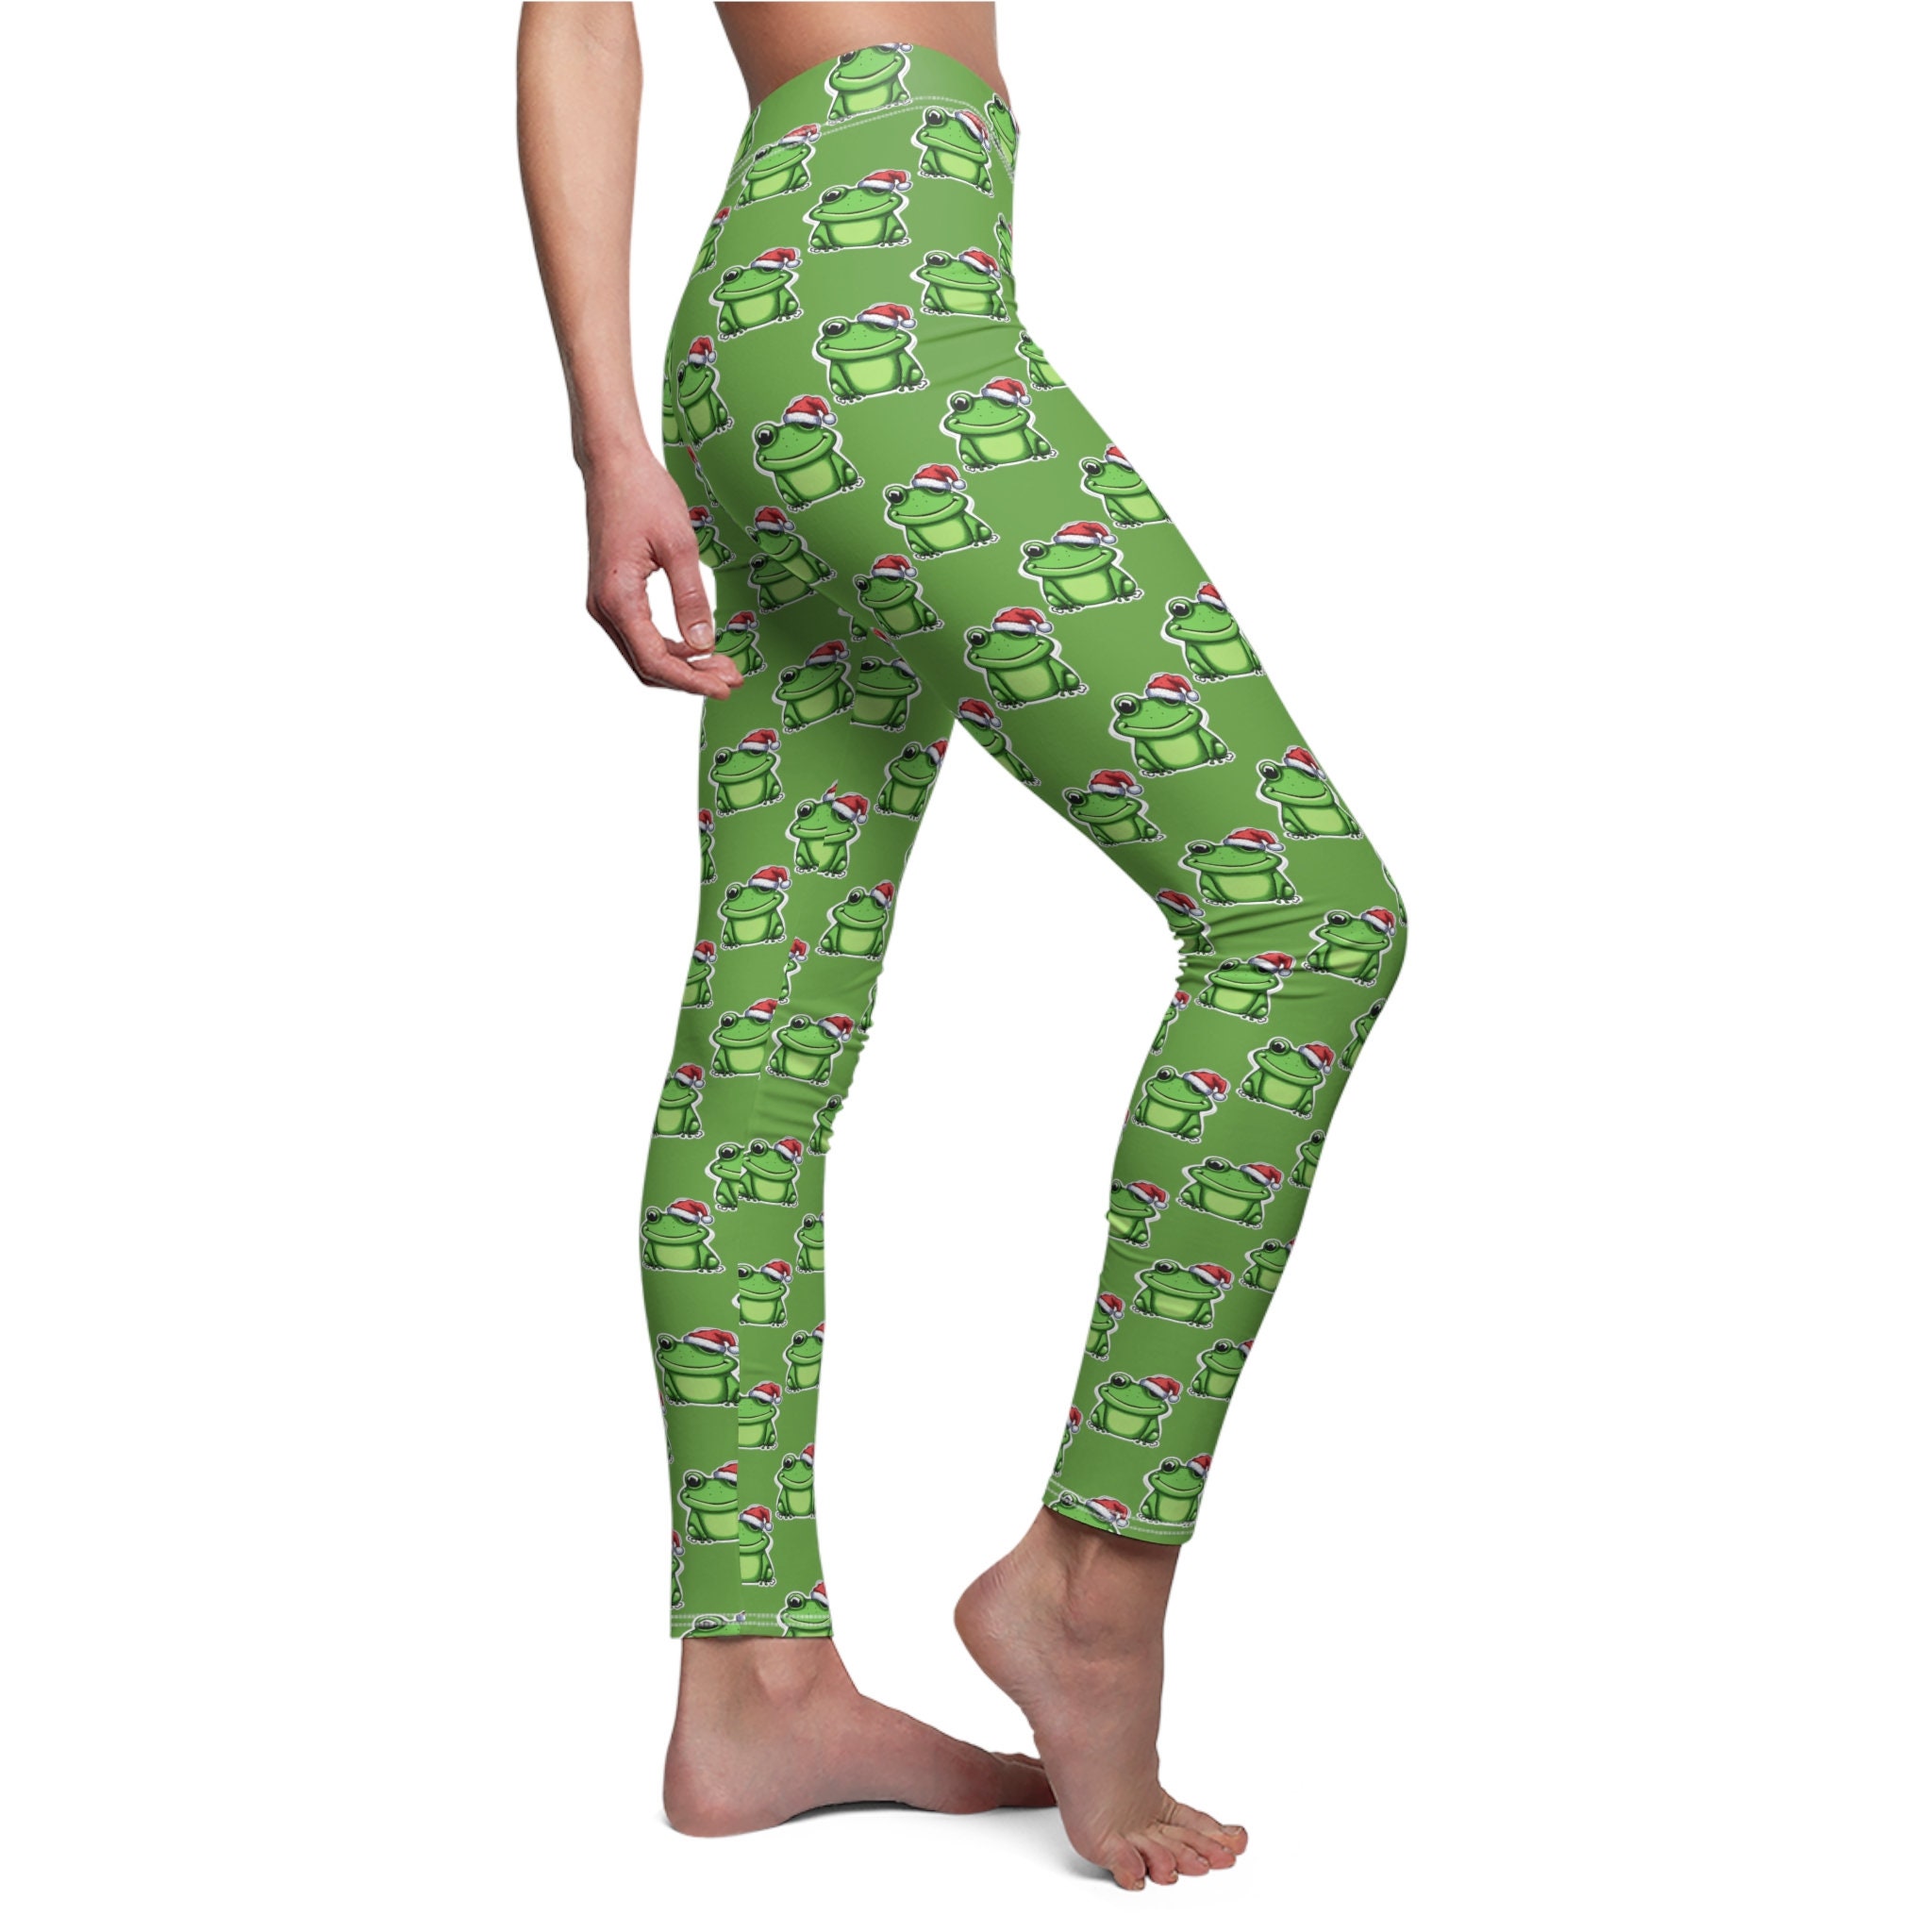 Frog Girls Leggings (8-20), Green Youth Teen Cute Printed Kids Yoga Pants  Graphic Fun Tights Tween Daughter